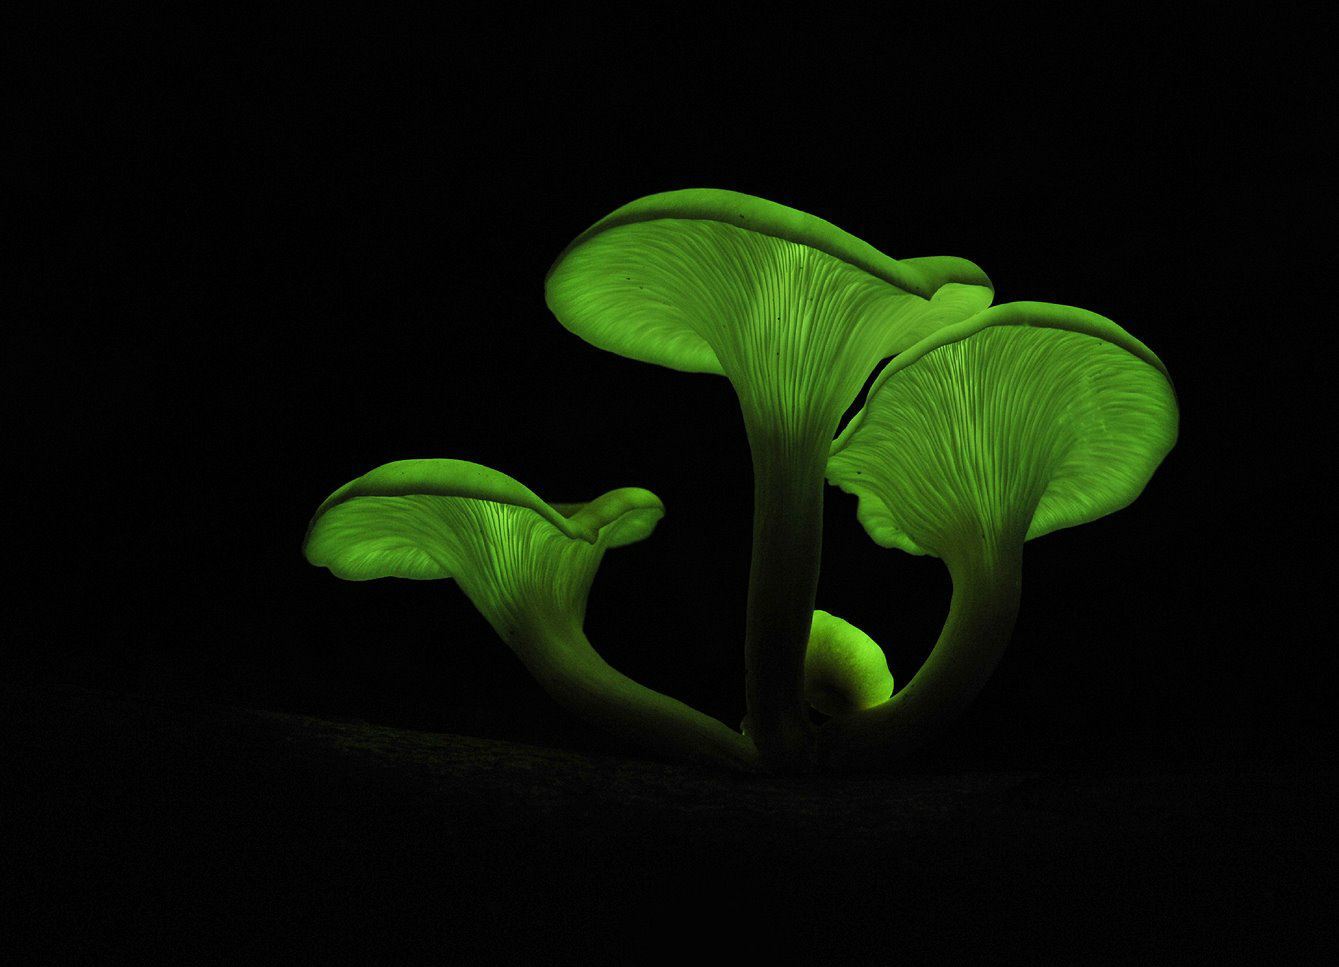 Omphalotus nidiformis - Spookzwammetje, Australische lantaarnzwam, Glow in the Dark Mushroom